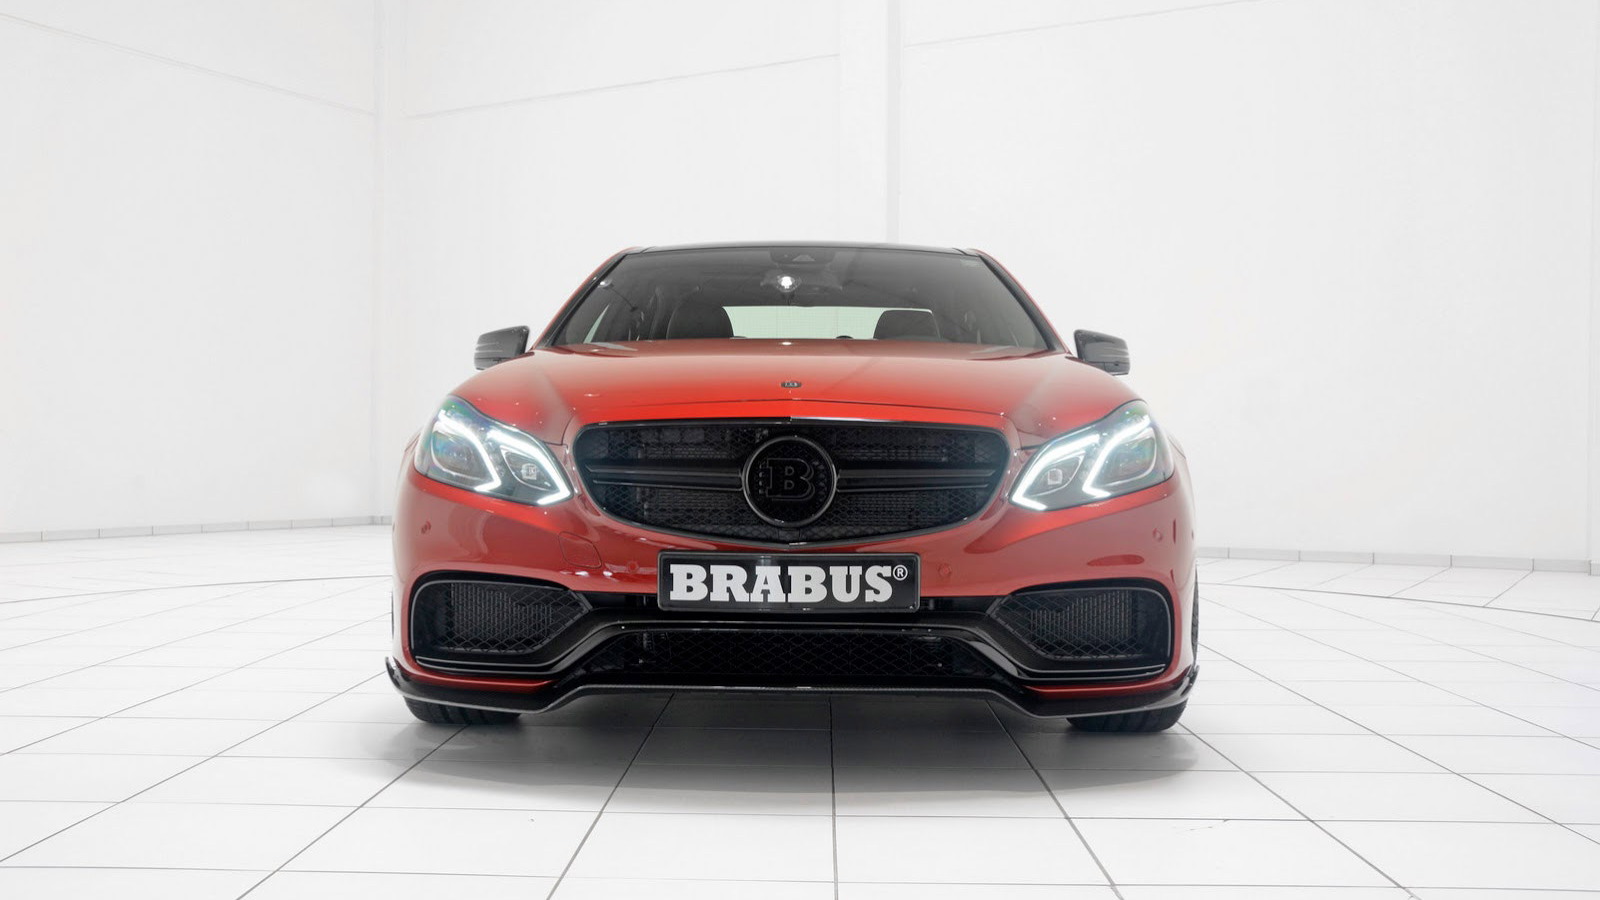 Brabus 850 6.0 Biturbo based on the 2014 Mercedes-Benz E63 AMG